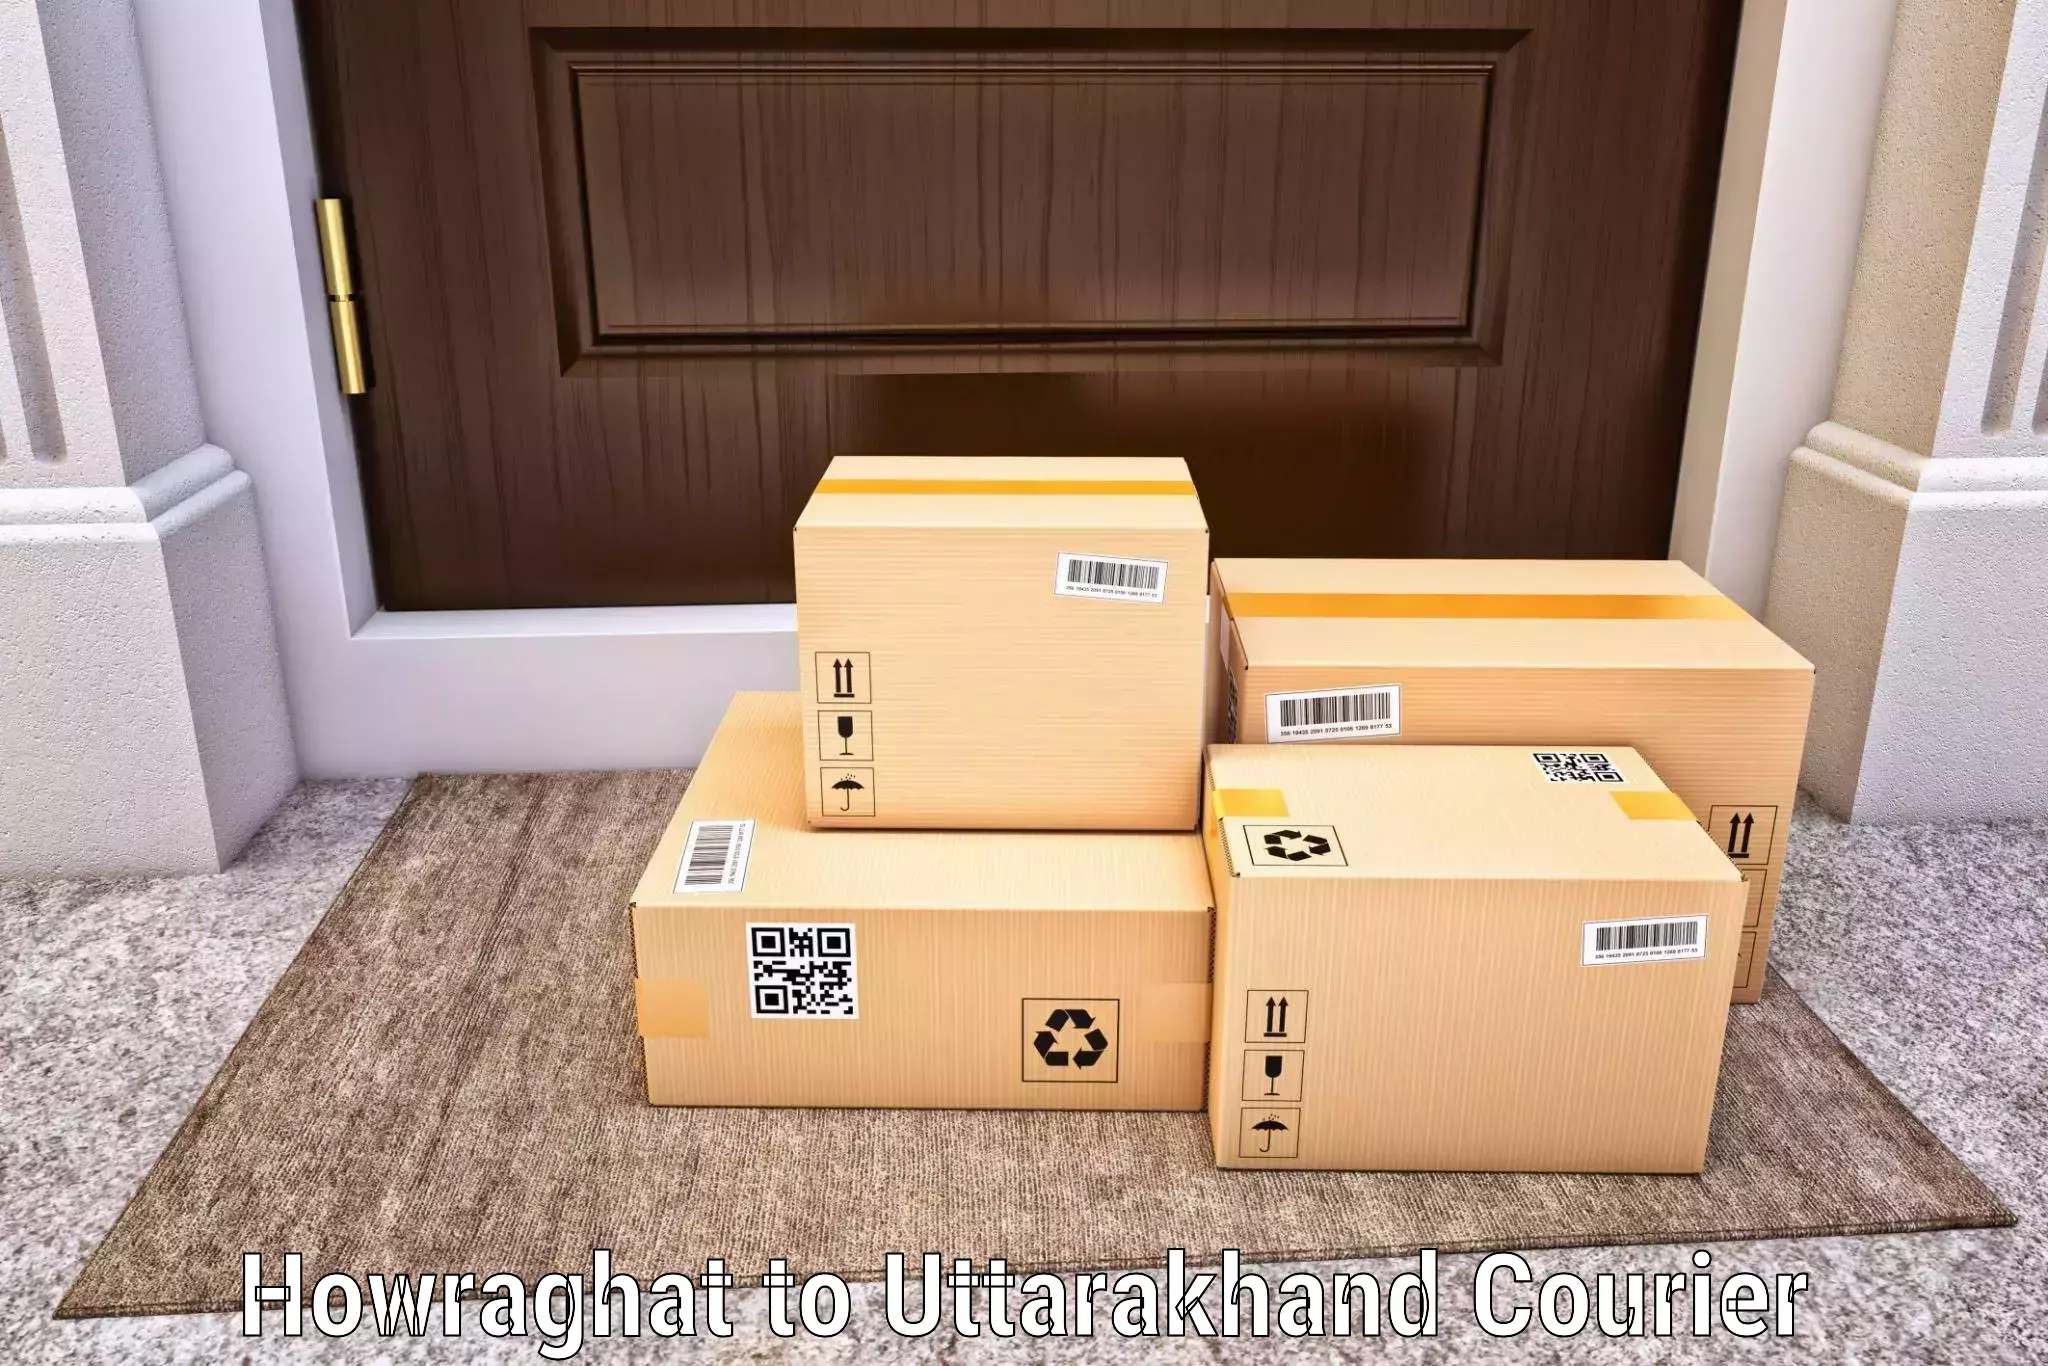 Global parcel delivery Howraghat to Karnaprayag